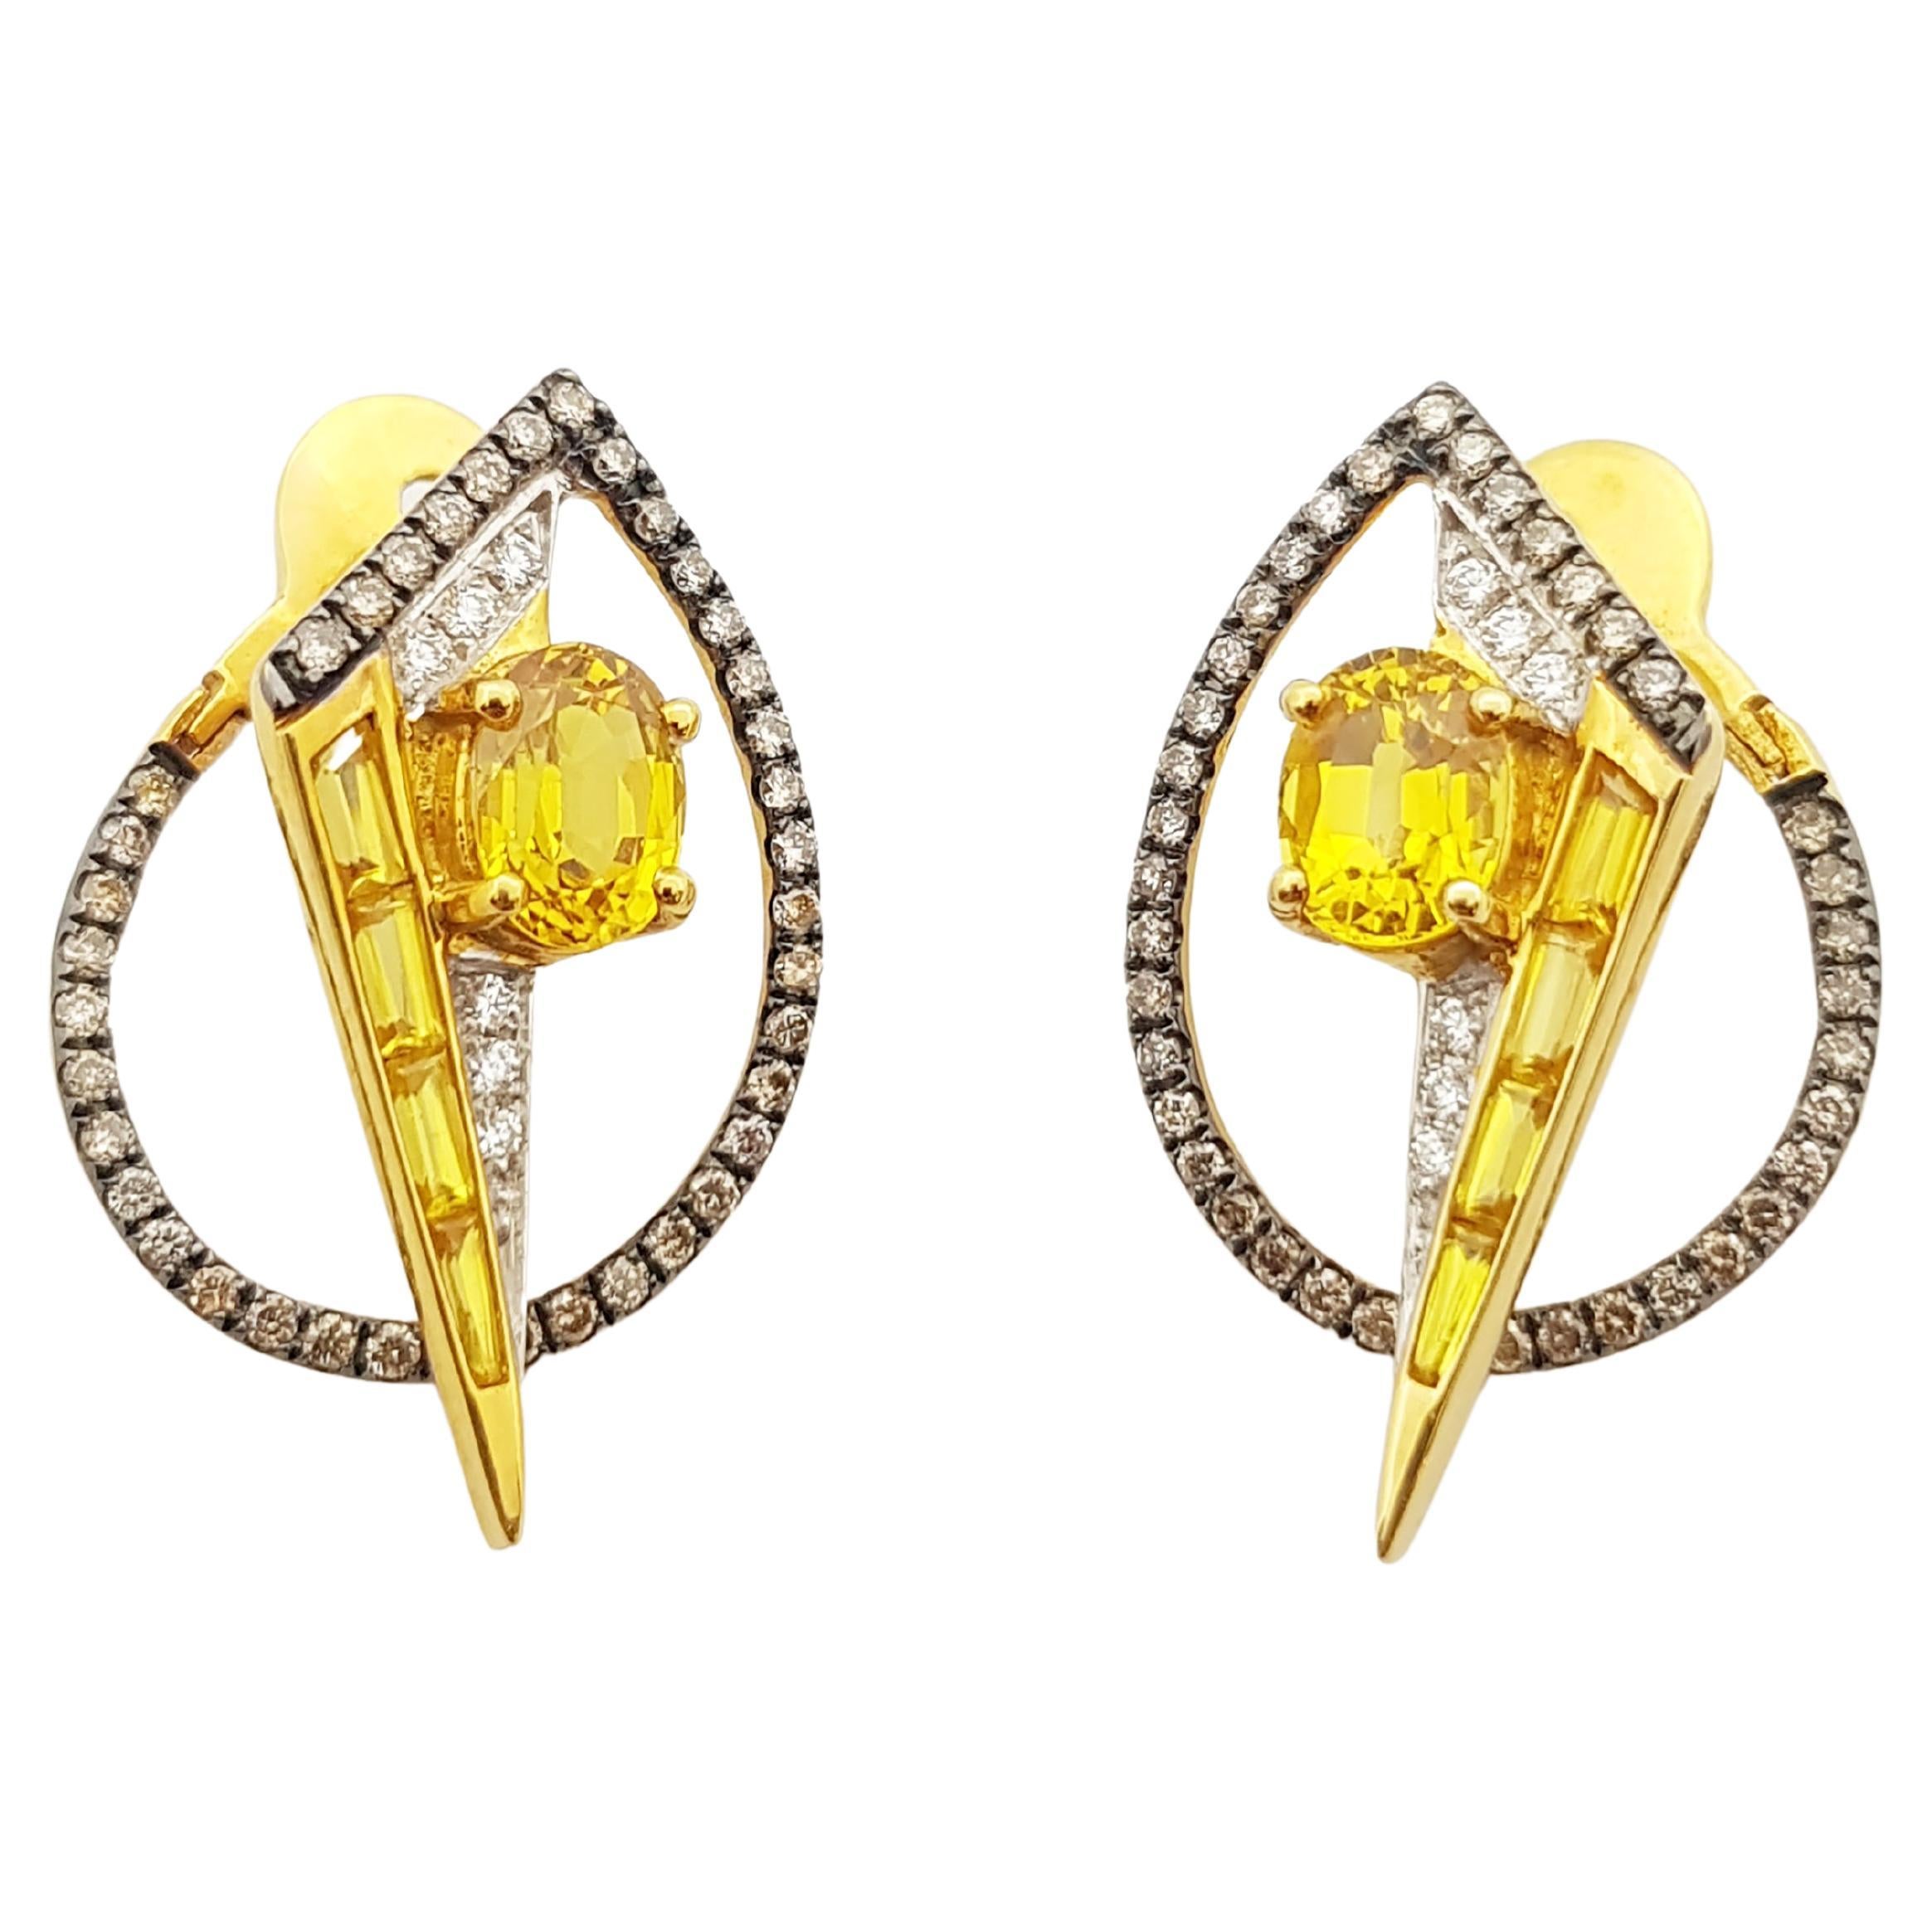 Yellow Sapphire, Diamond, Brown Diamond Earrings in 18K Gold by Kavant & Sharart For Sale